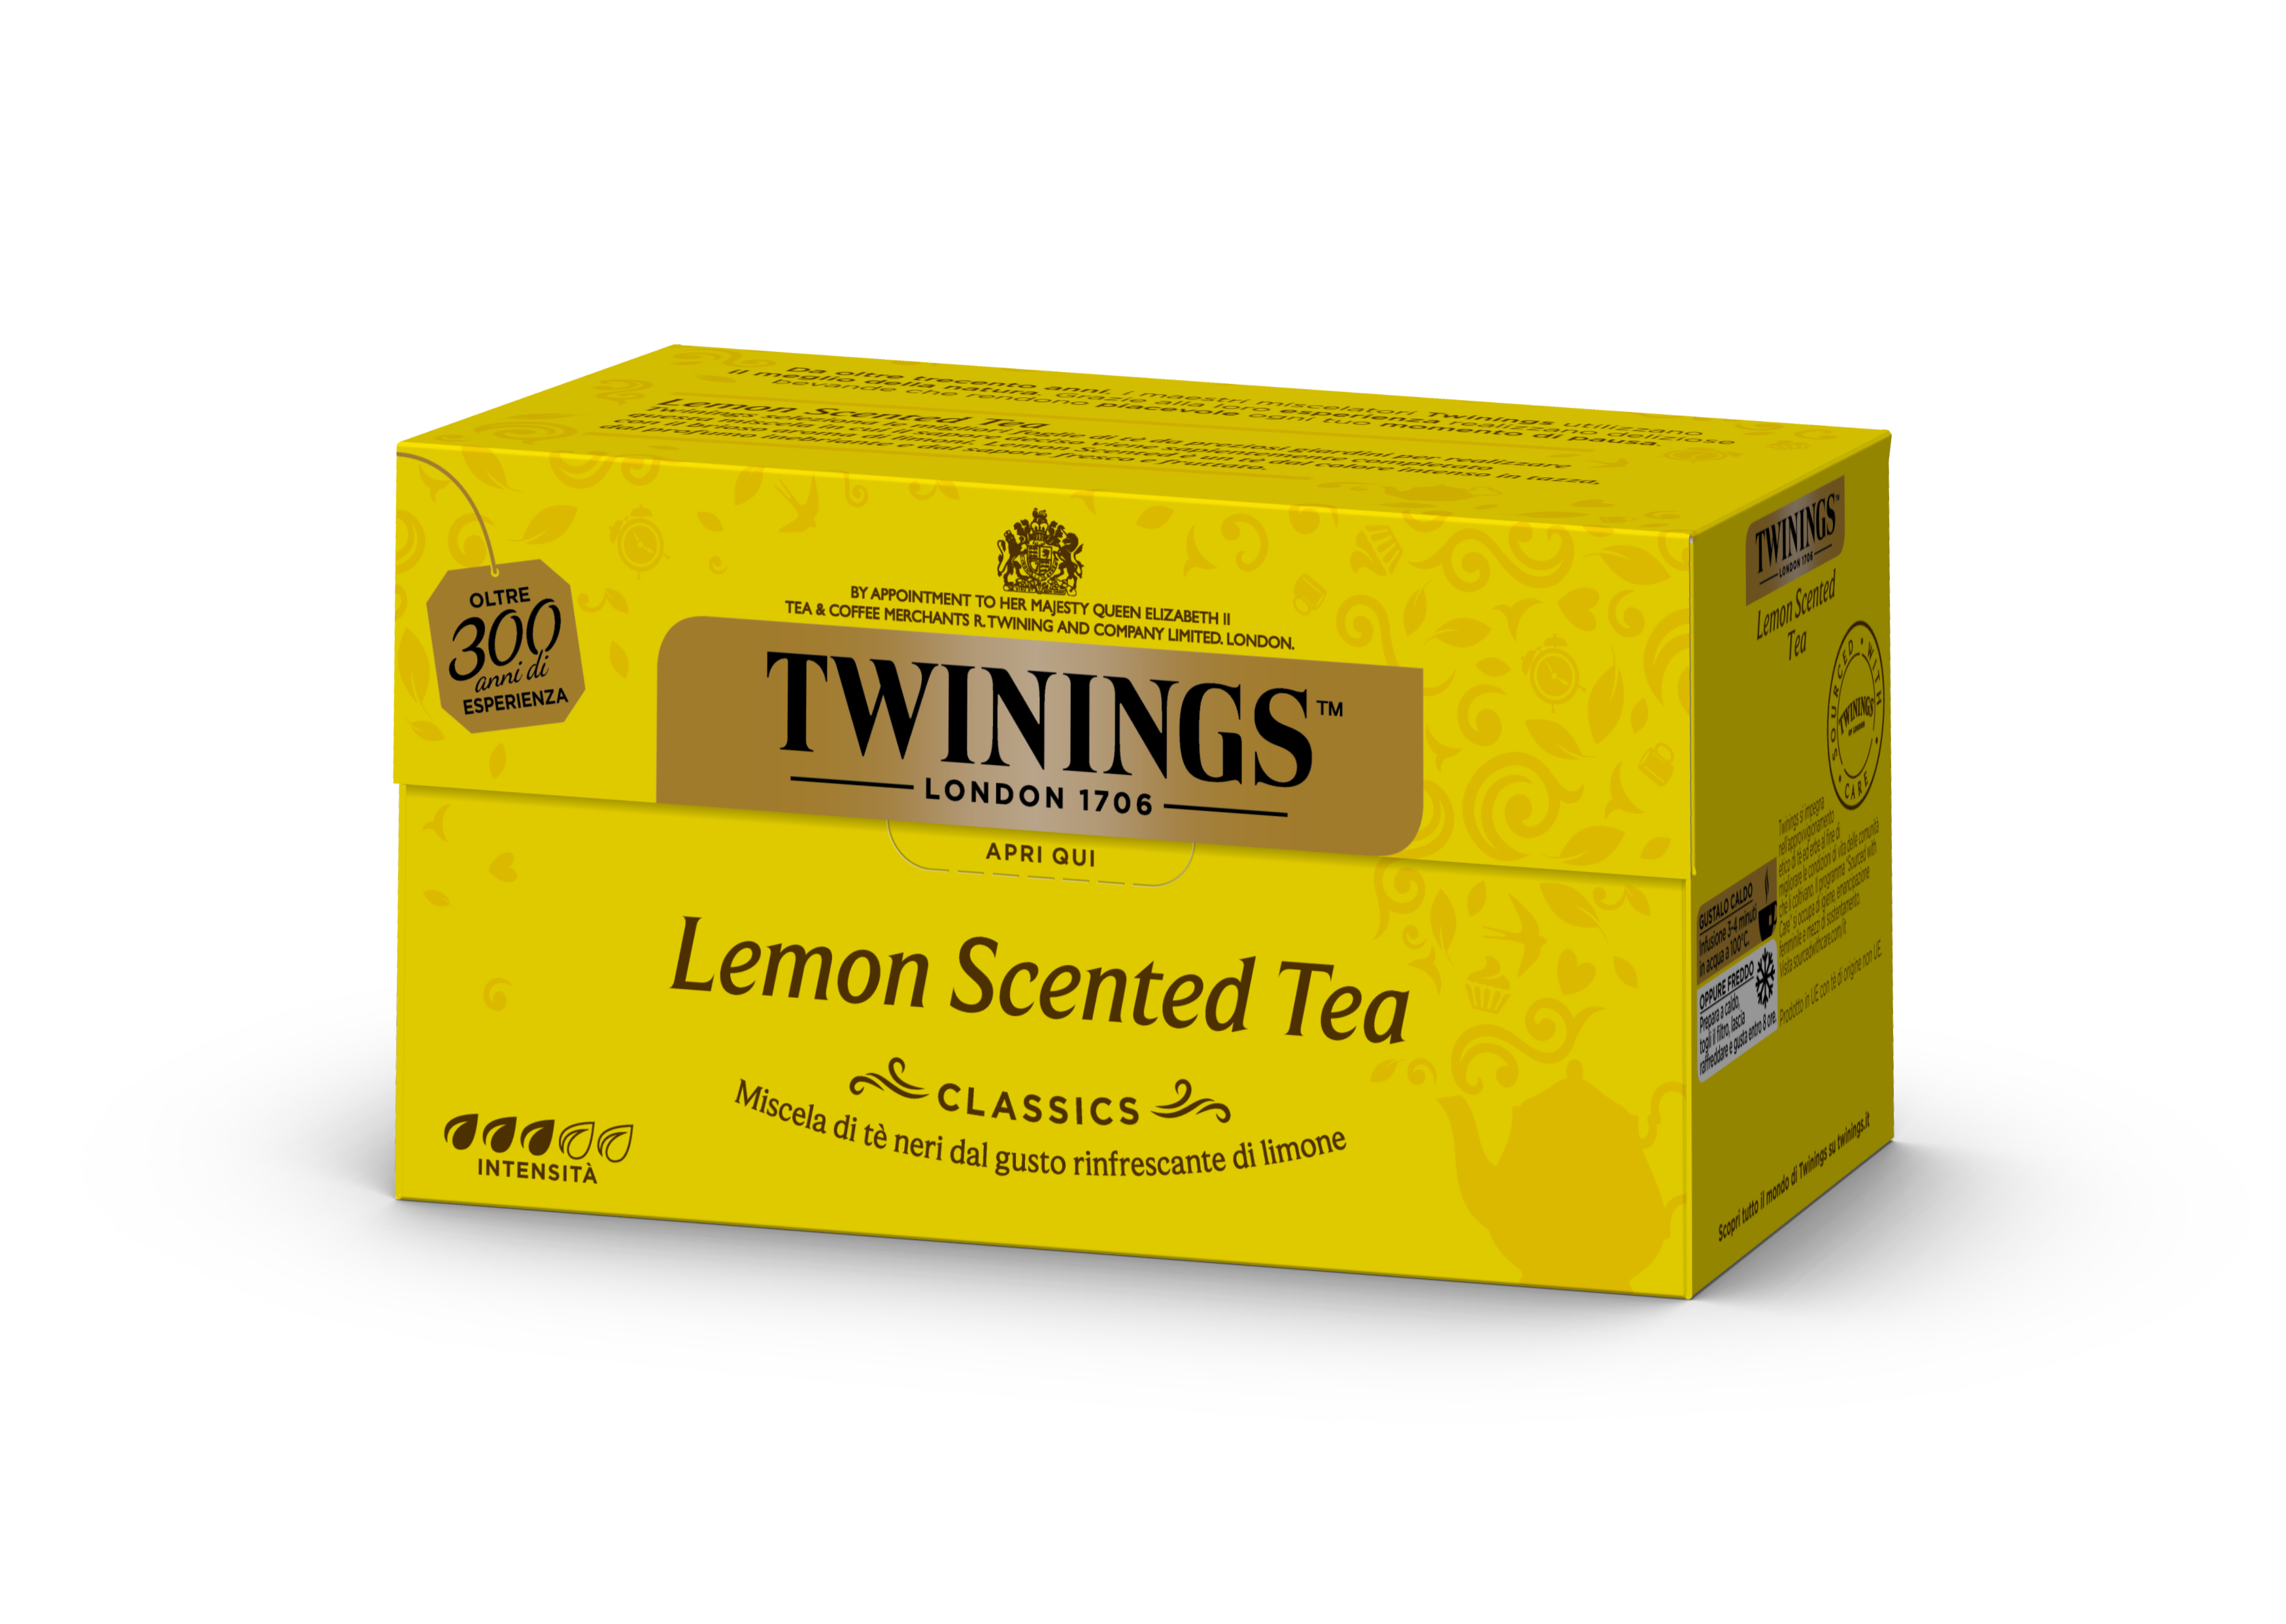 Lemon Scented Tea